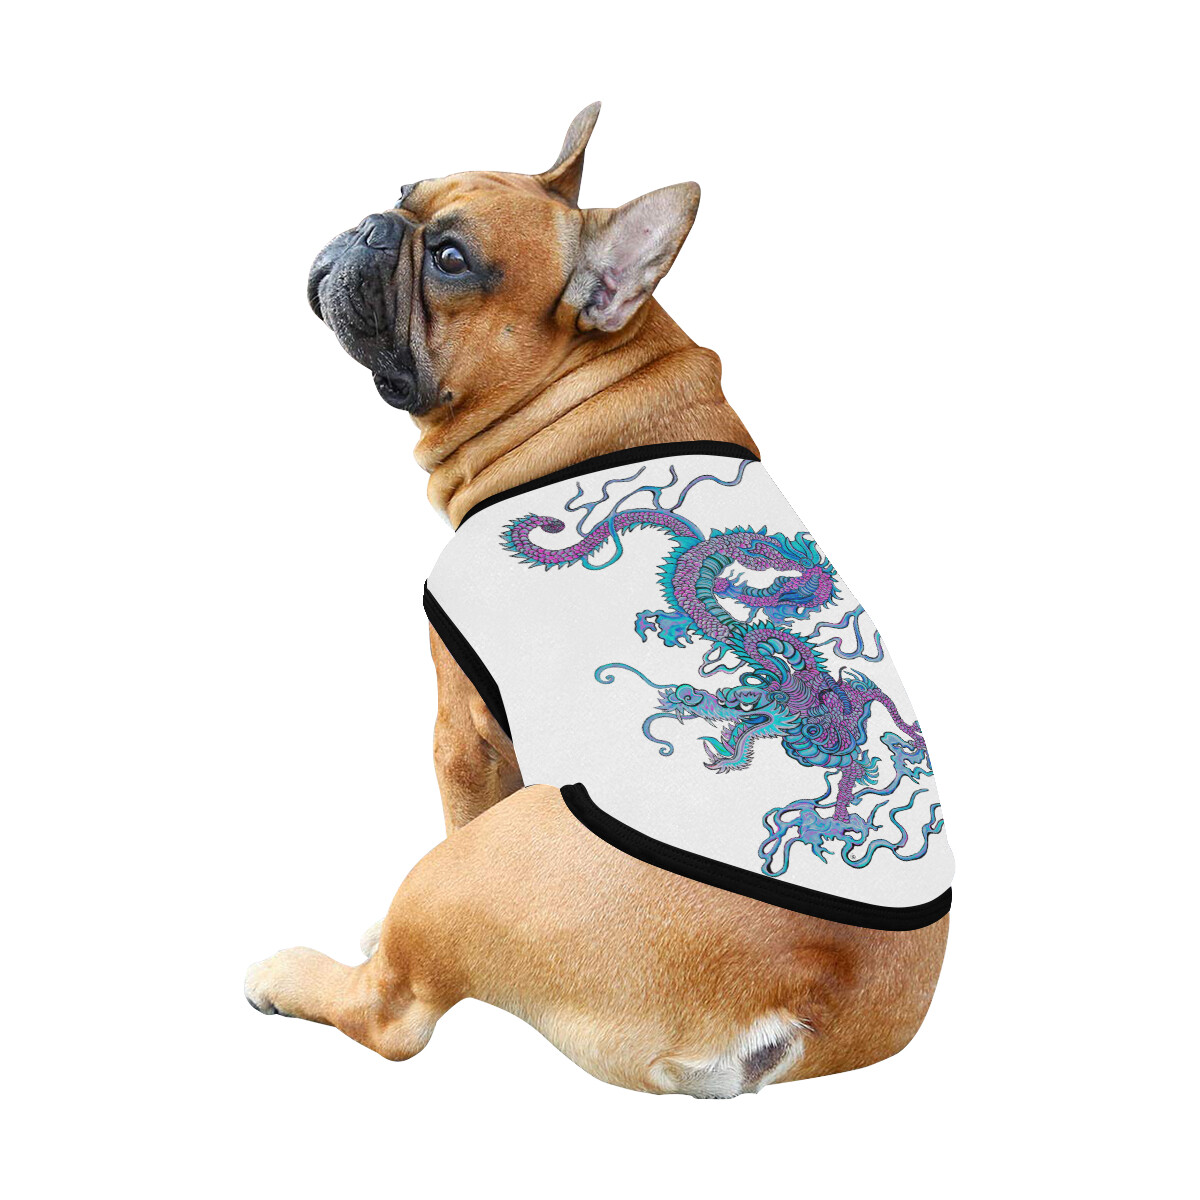 🐕🐉 Maru's Feilong Chinese Flying Dragon Dog shirt, Dog Tank Top, Dog t-shirt, Dog clothes, Gift, 7 sizes XS to 3XL, dog gifts, 50 colors, white